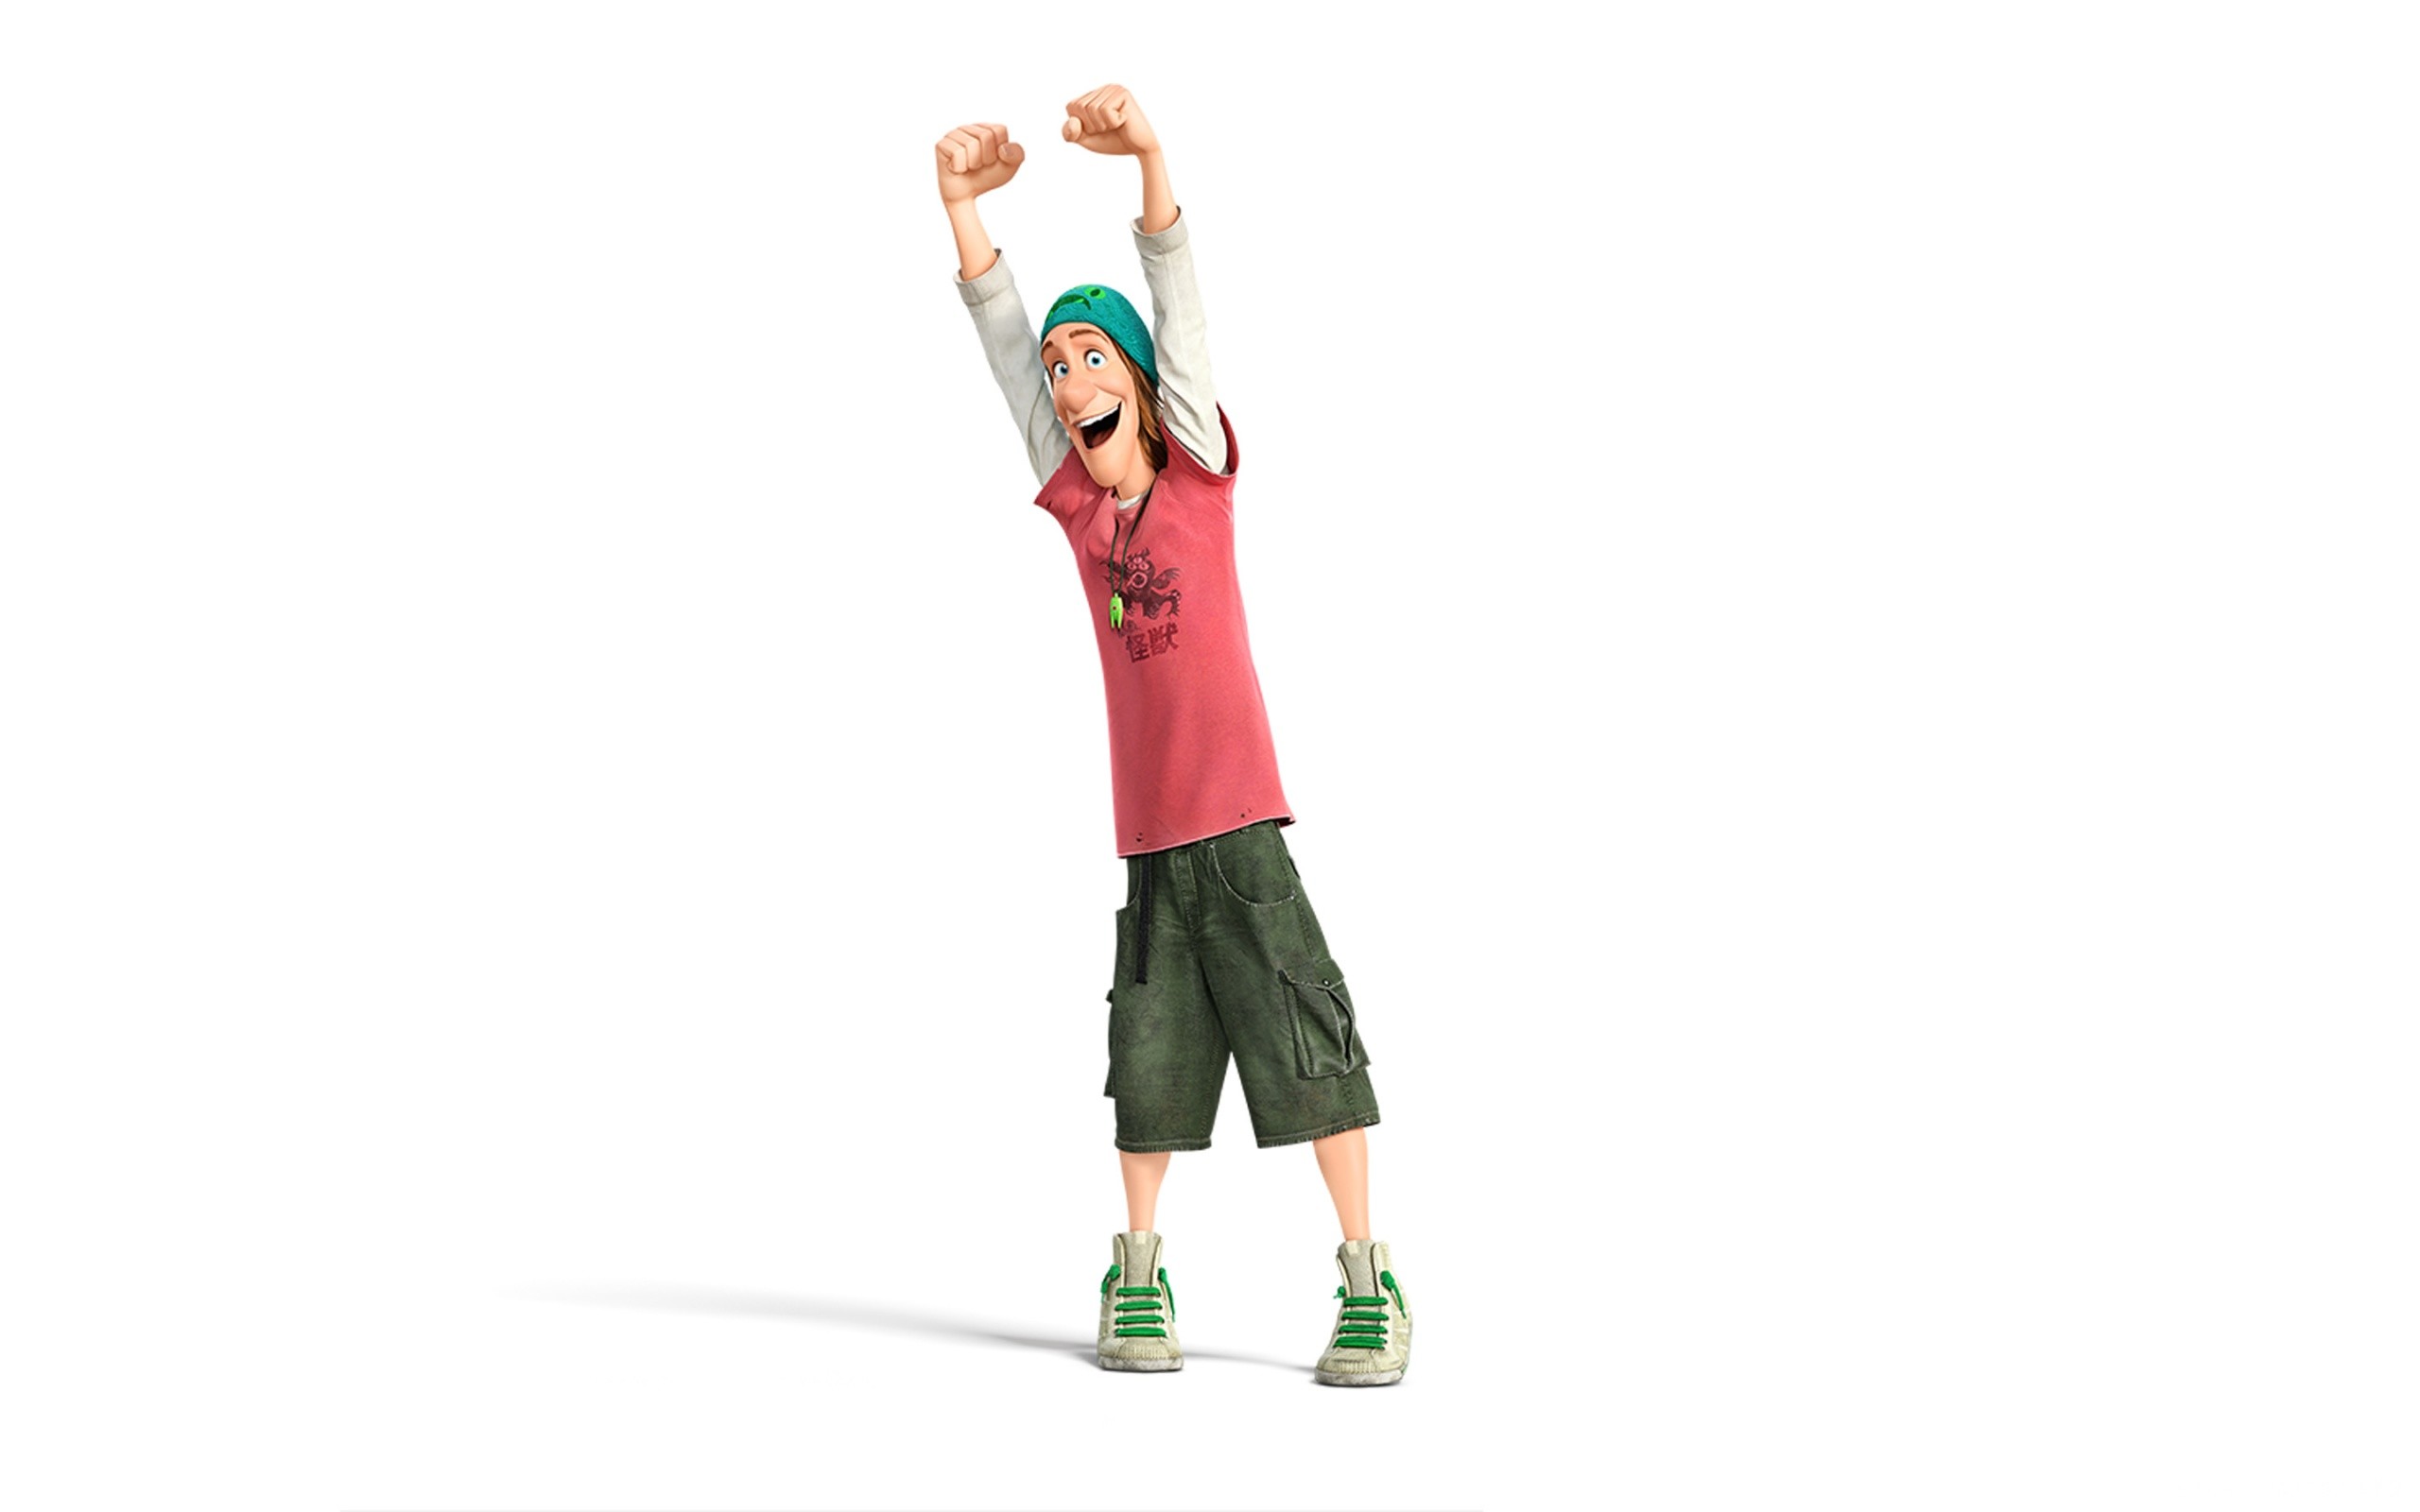 2560x1600 Animated Film 2014 Big Hero 6 Character Fred Image